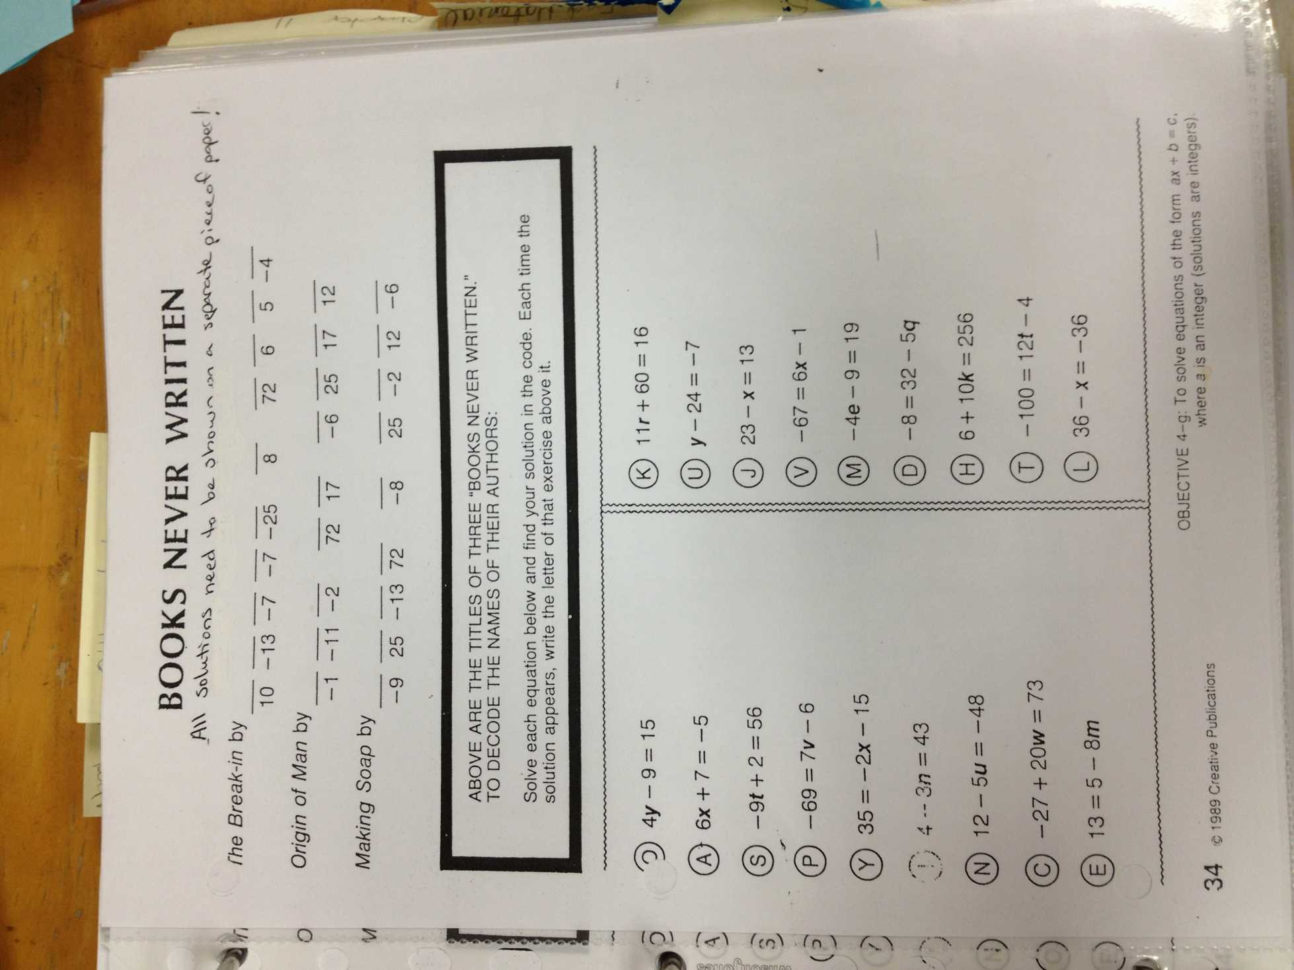 Books Never Written How To Make Bigbucks Math Worksheet Answers